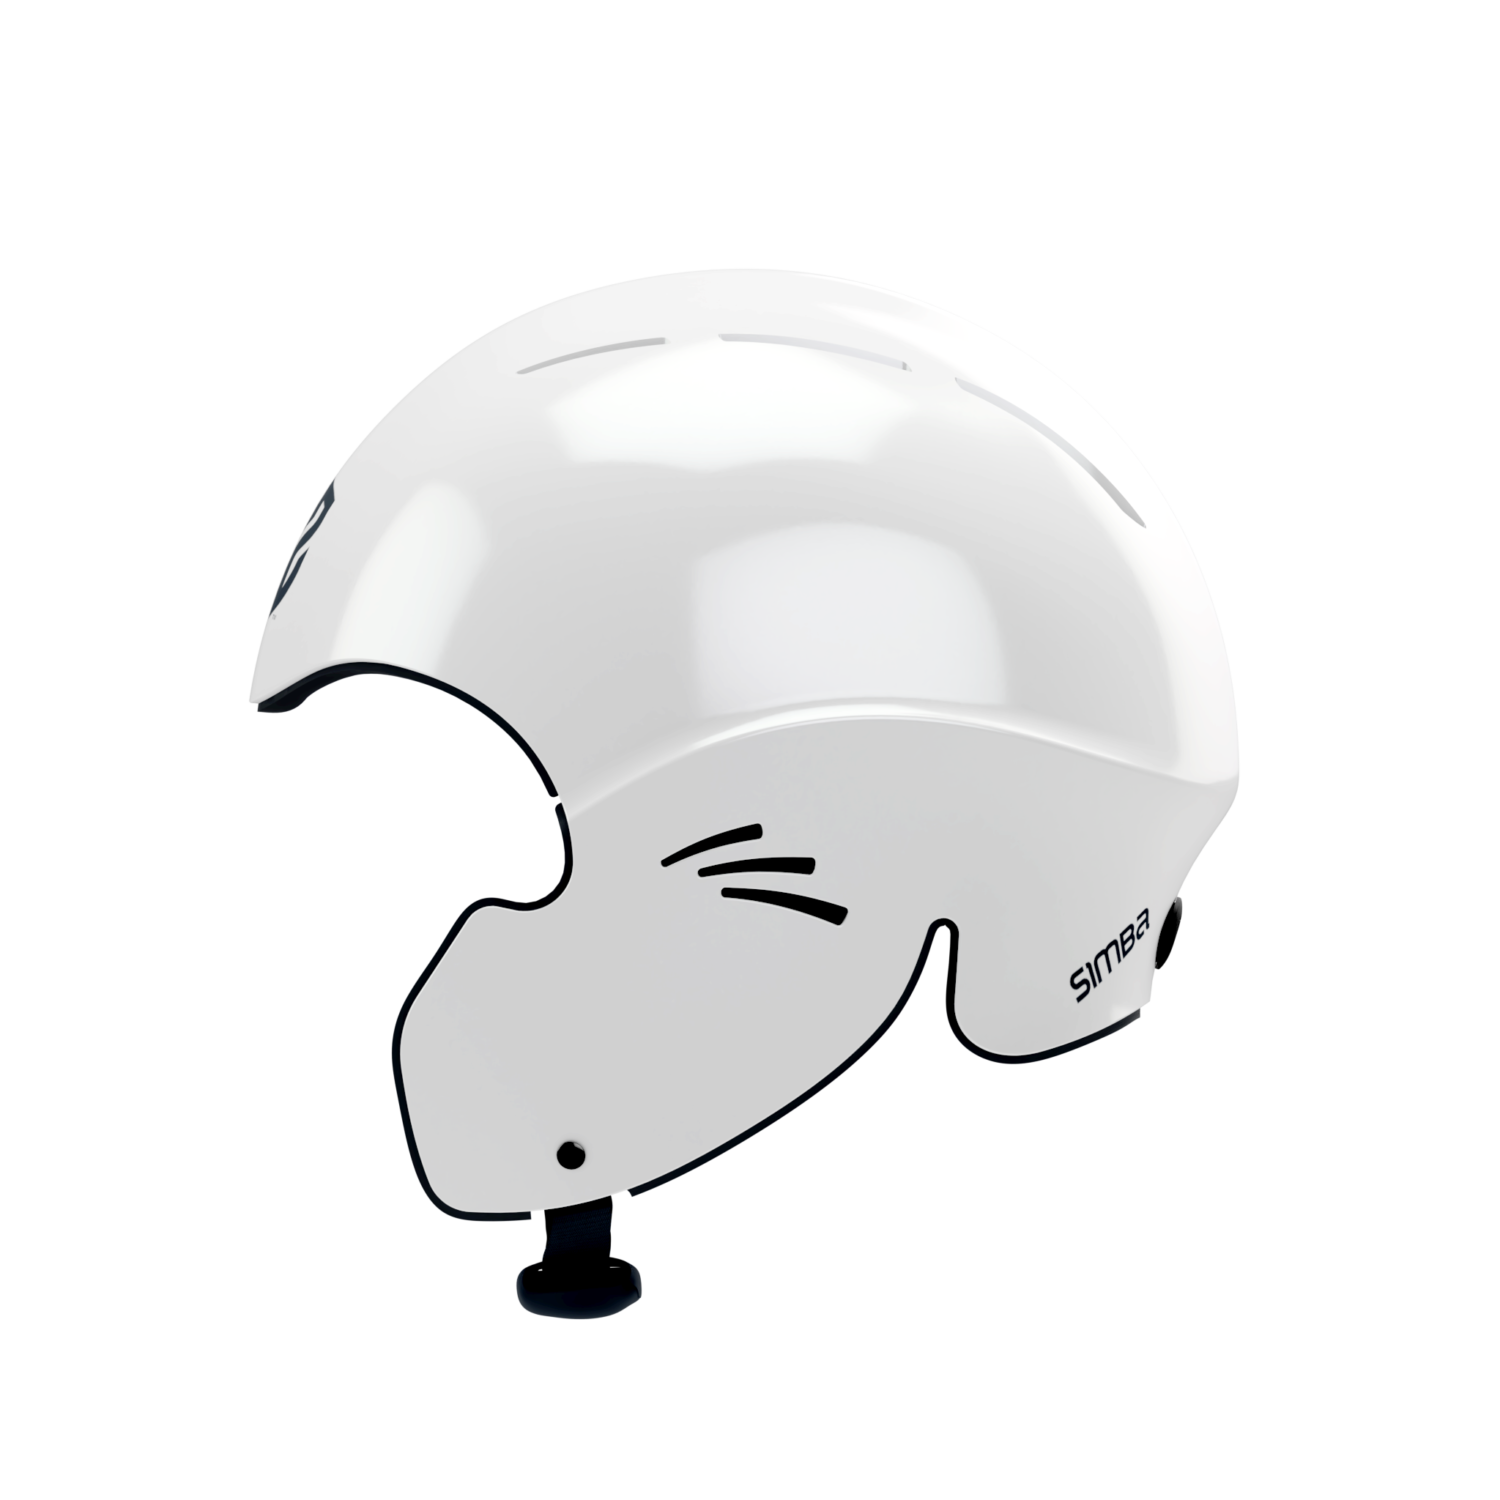 Simba Helmet - NZ Foil Centre